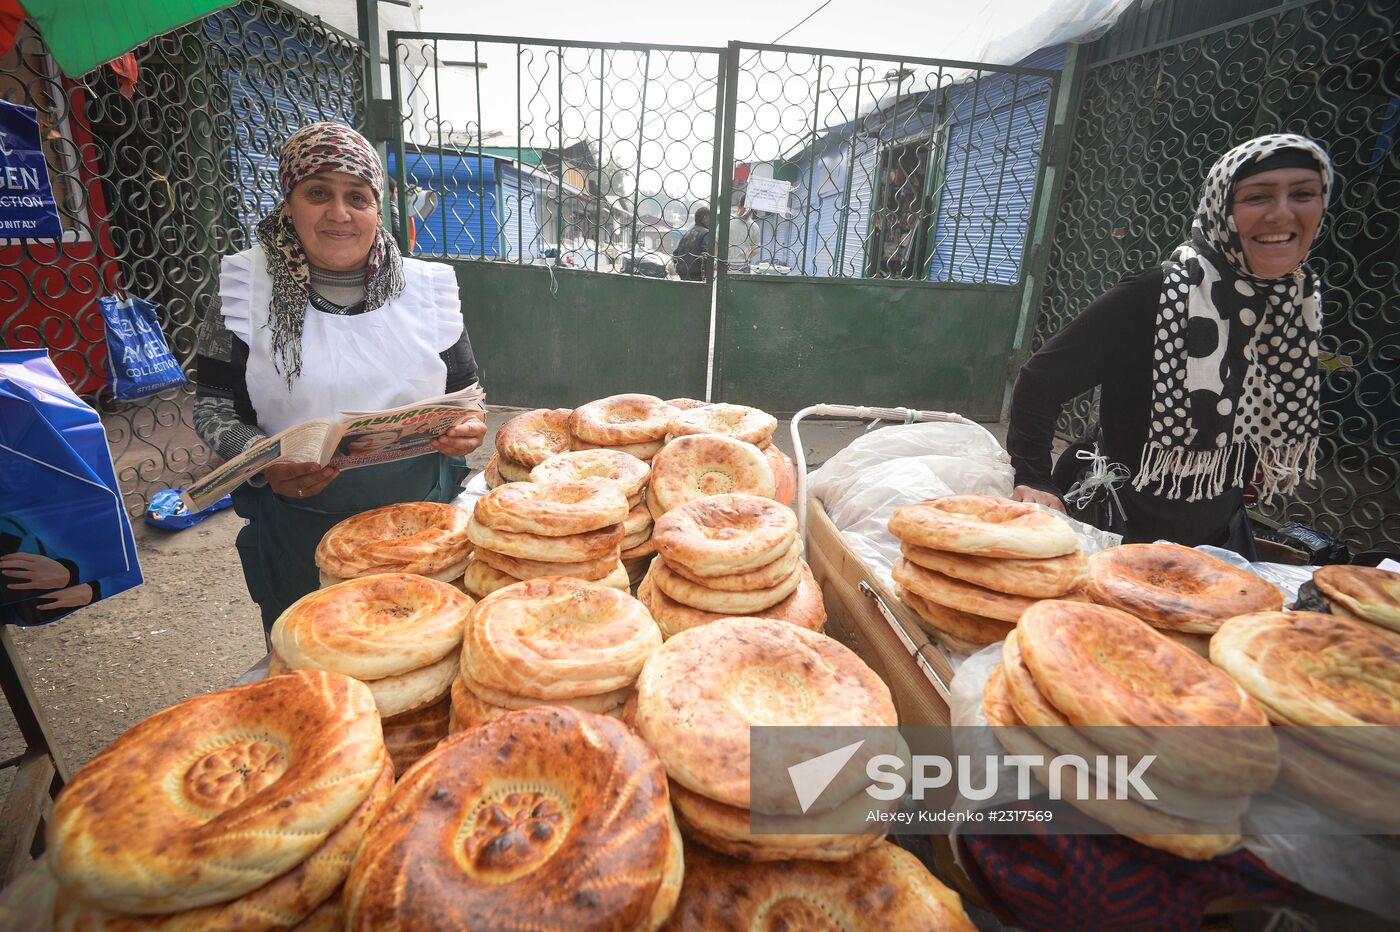 Green market in Dushanbe